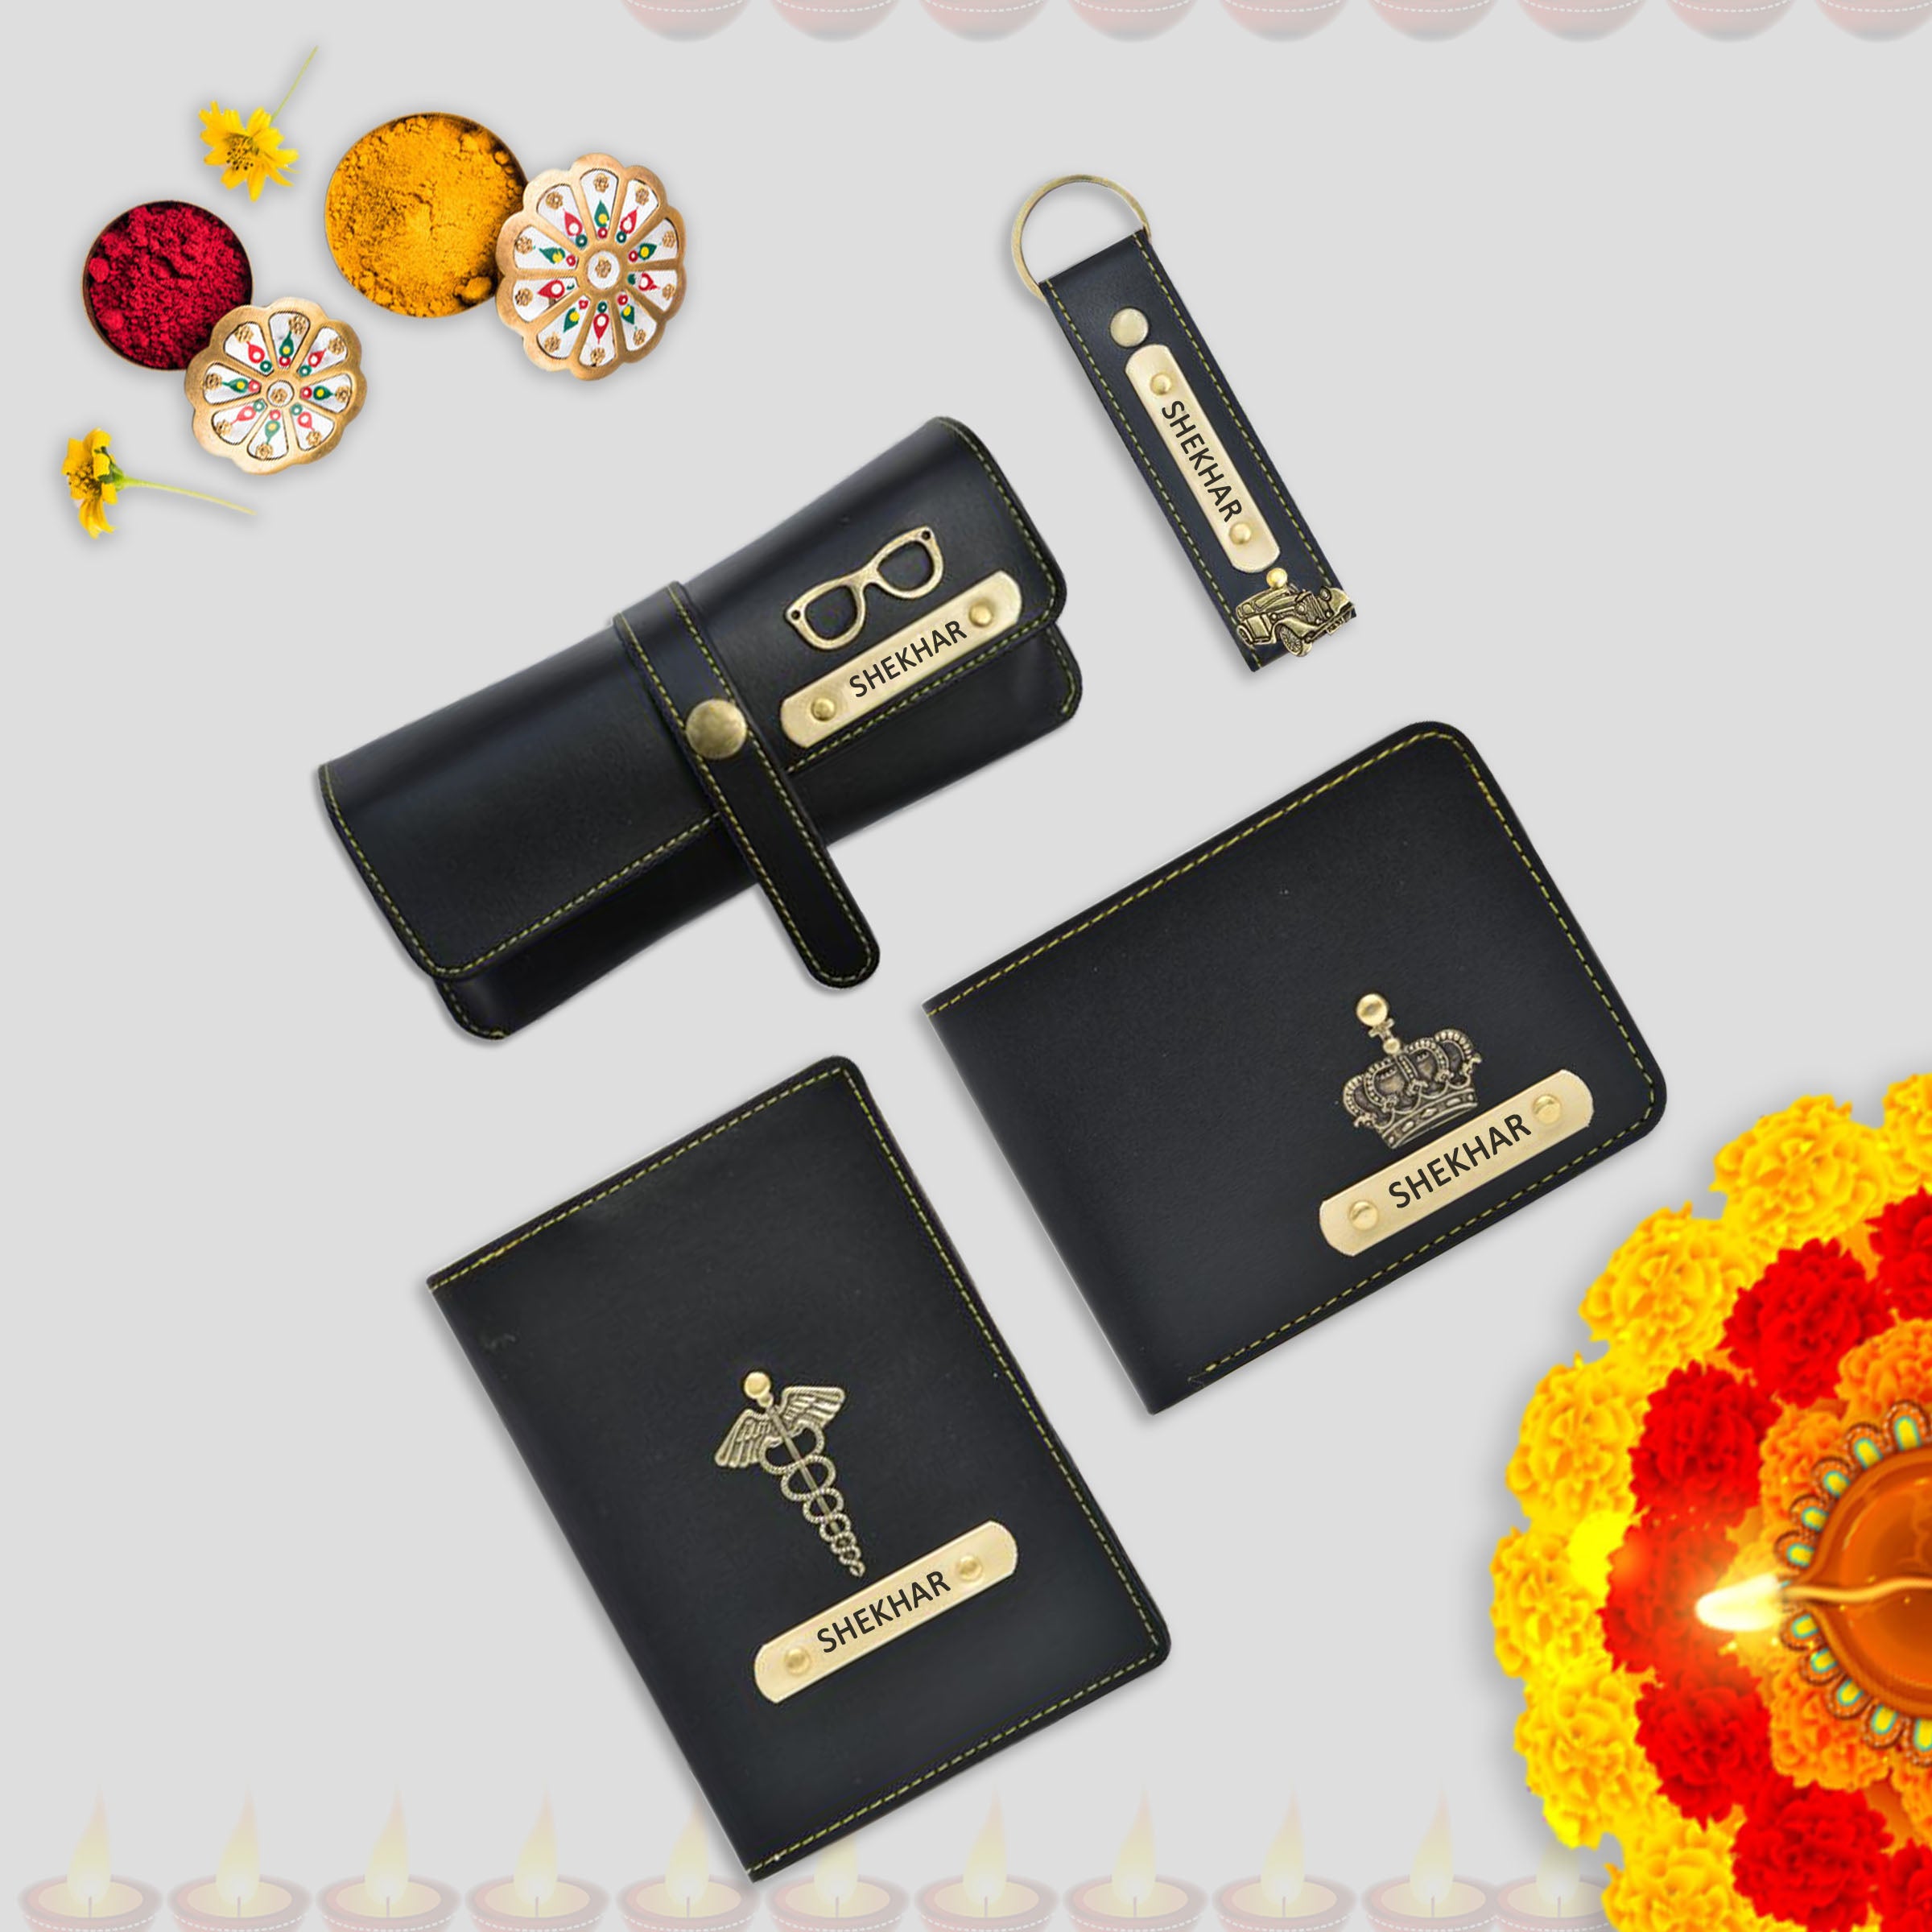 Corporate Diwali Gift Ideas • Chocovira Chocolates